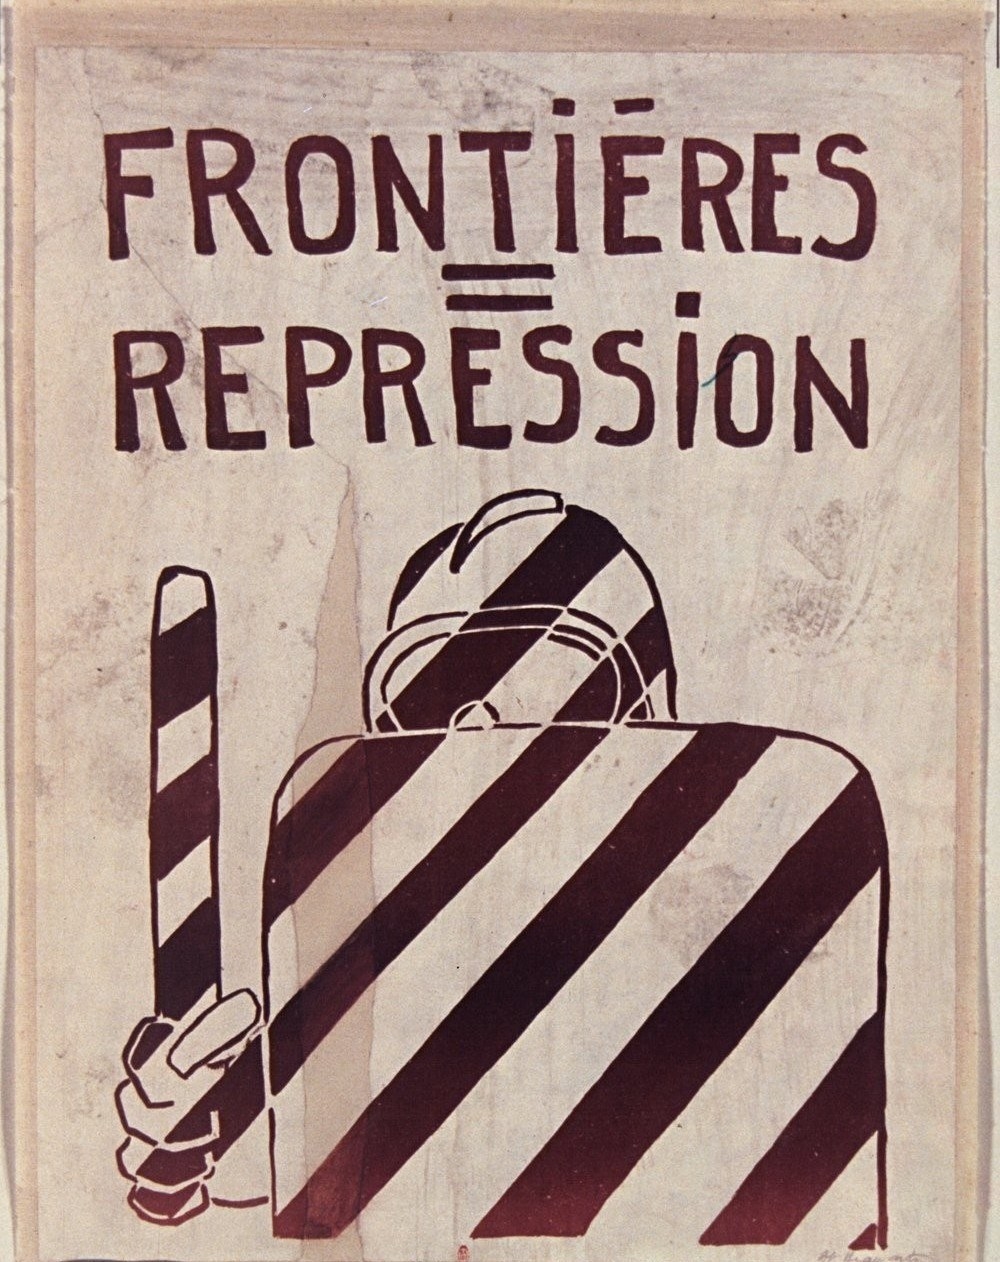 Frontieres Repression